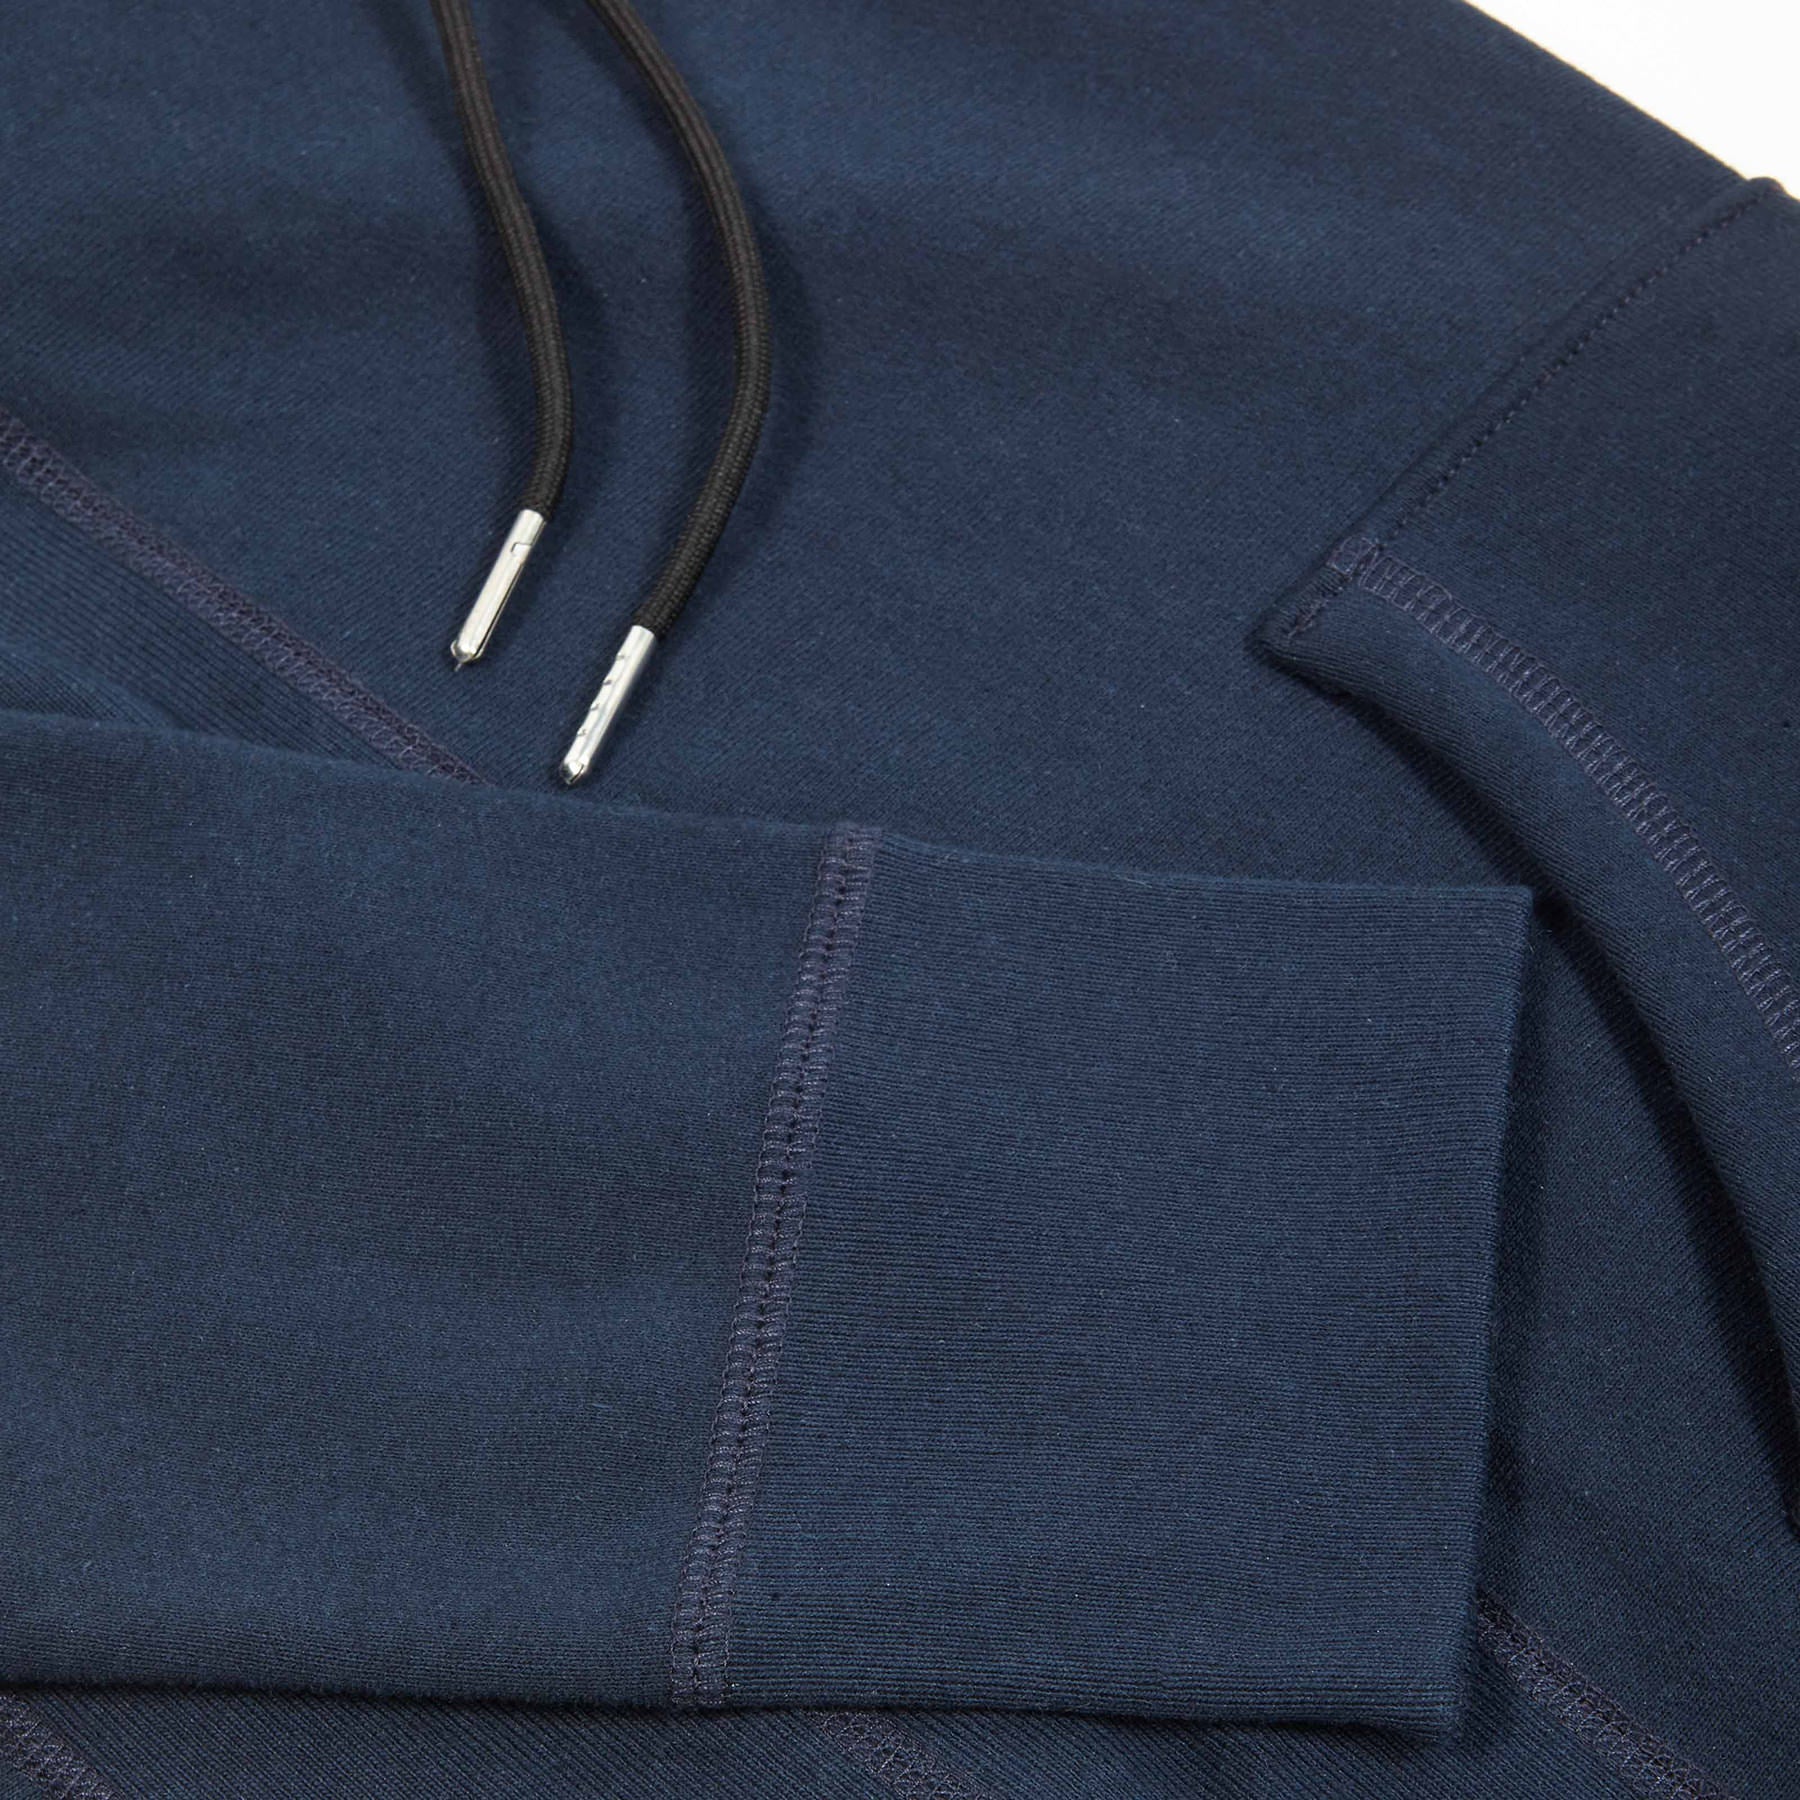 Drawstring and metal aglet detail on navy hoodie